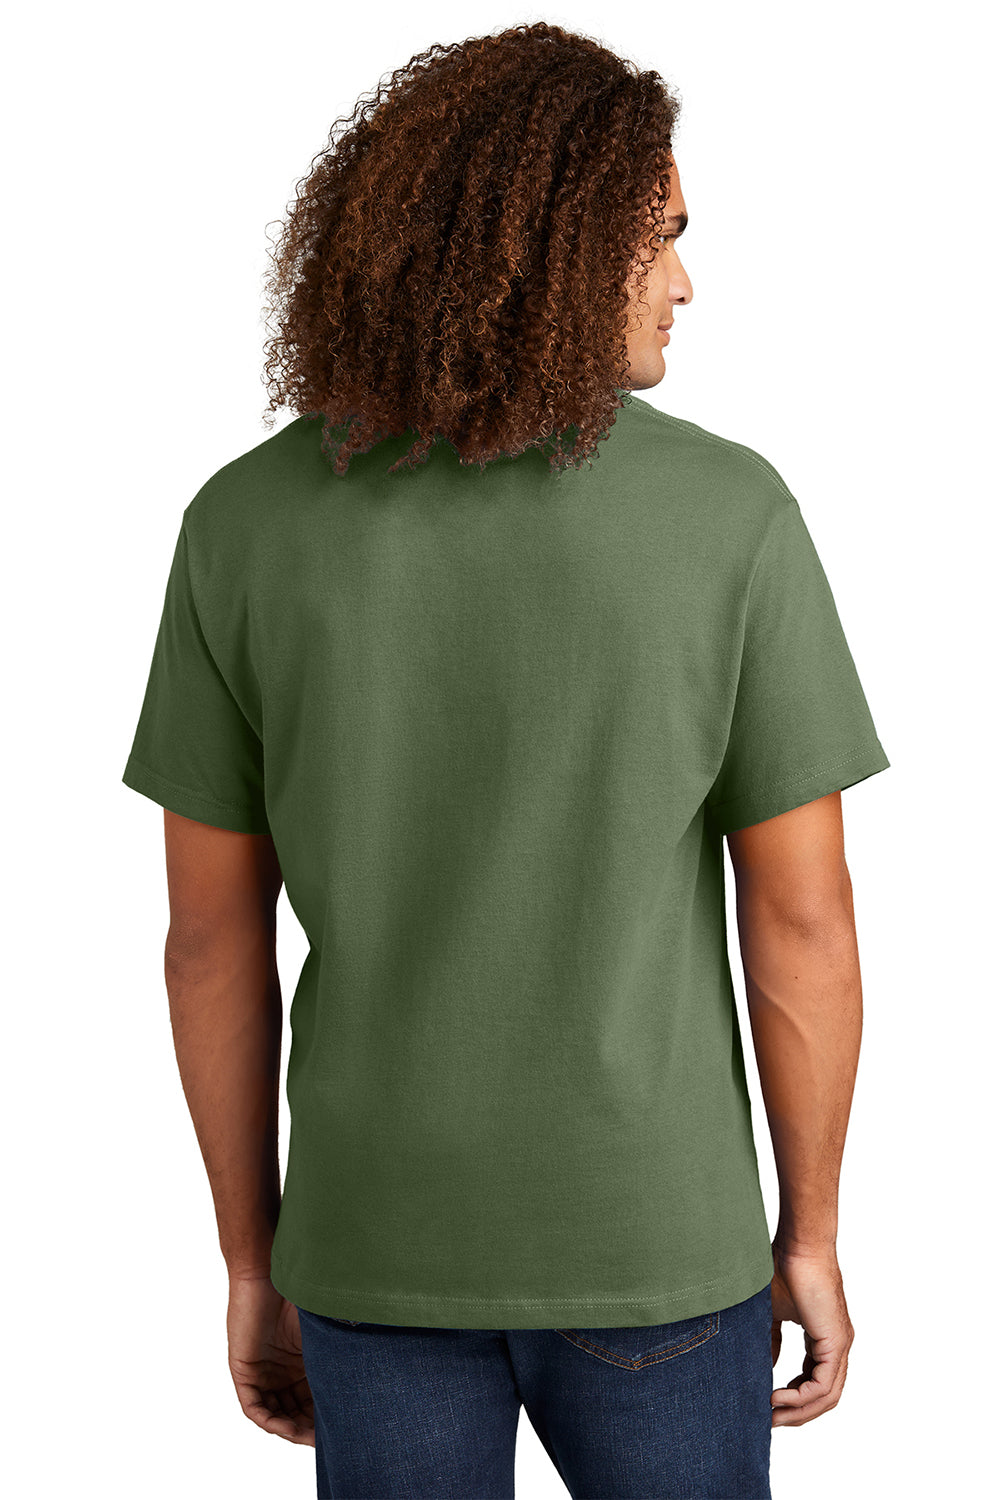 American Apparel 1301/AL1301 Mens Short Sleeve Crewneck T-Shirt Military Green Model Back